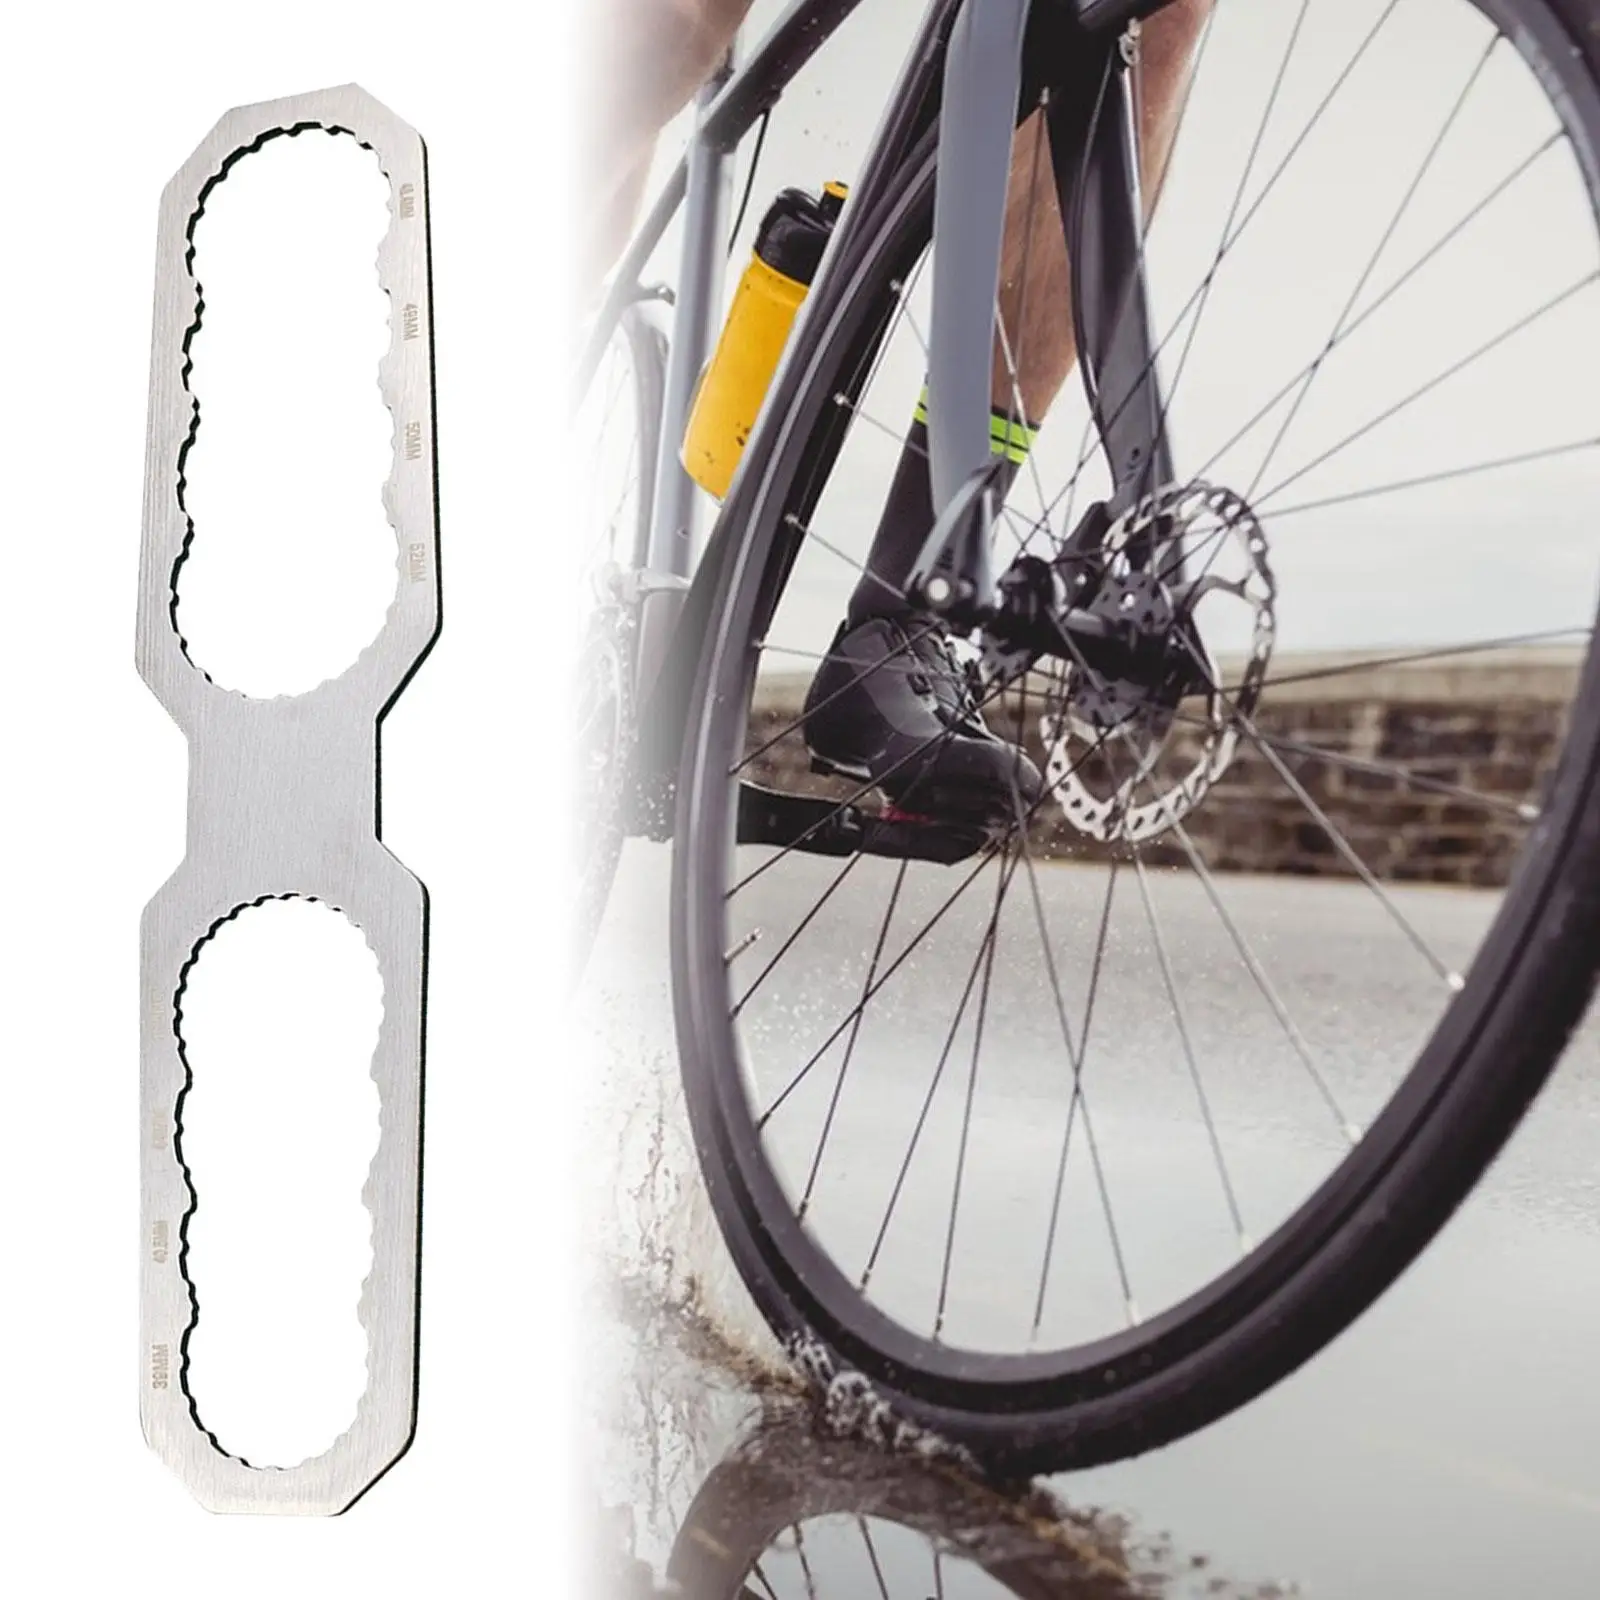 BB Wrench Bottom Bracket Removal Tool for Biking Repairing Cycling